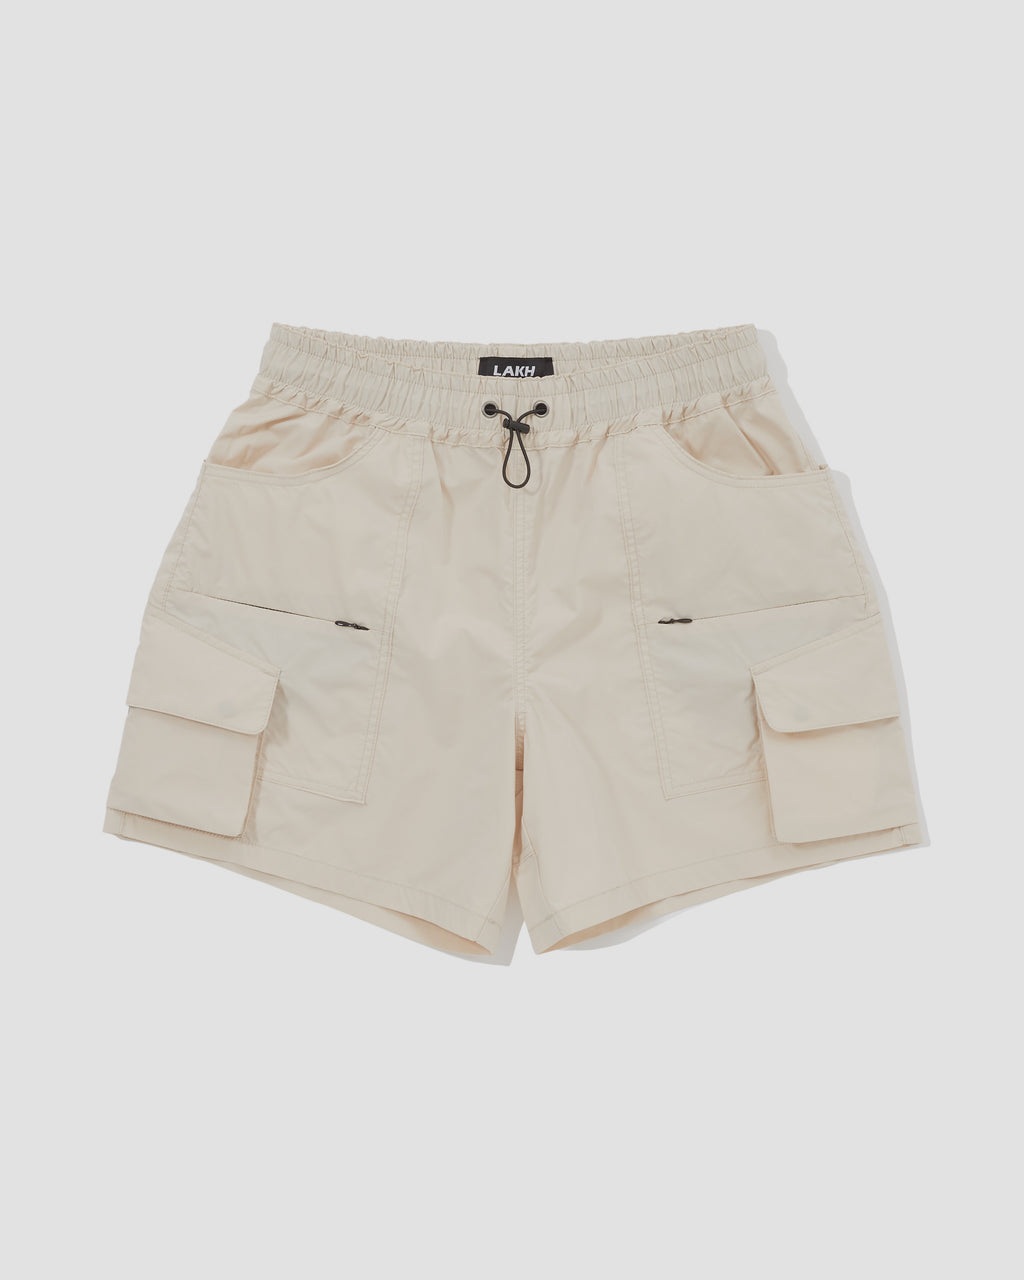 Field Shorts - Sand